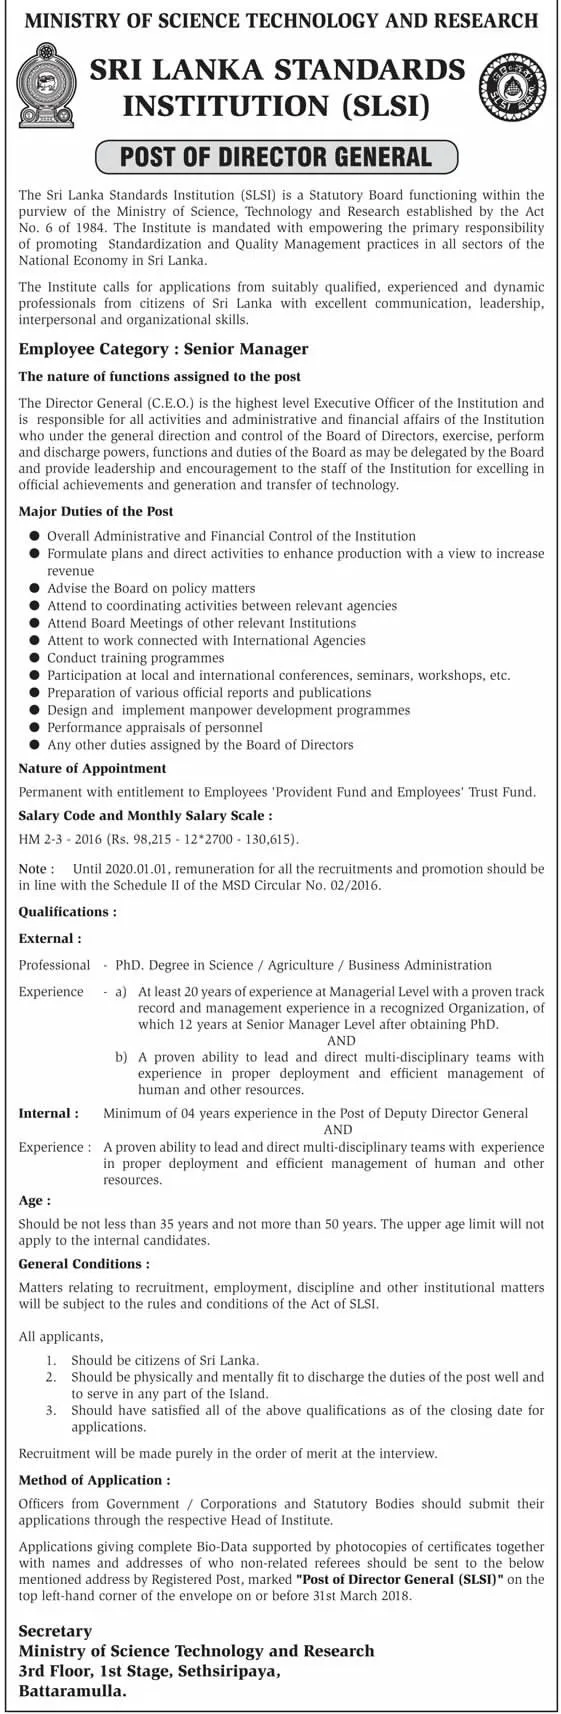 Sri Lanka Standards Institution (SLSI) Director General Jobs Vacancies Applications